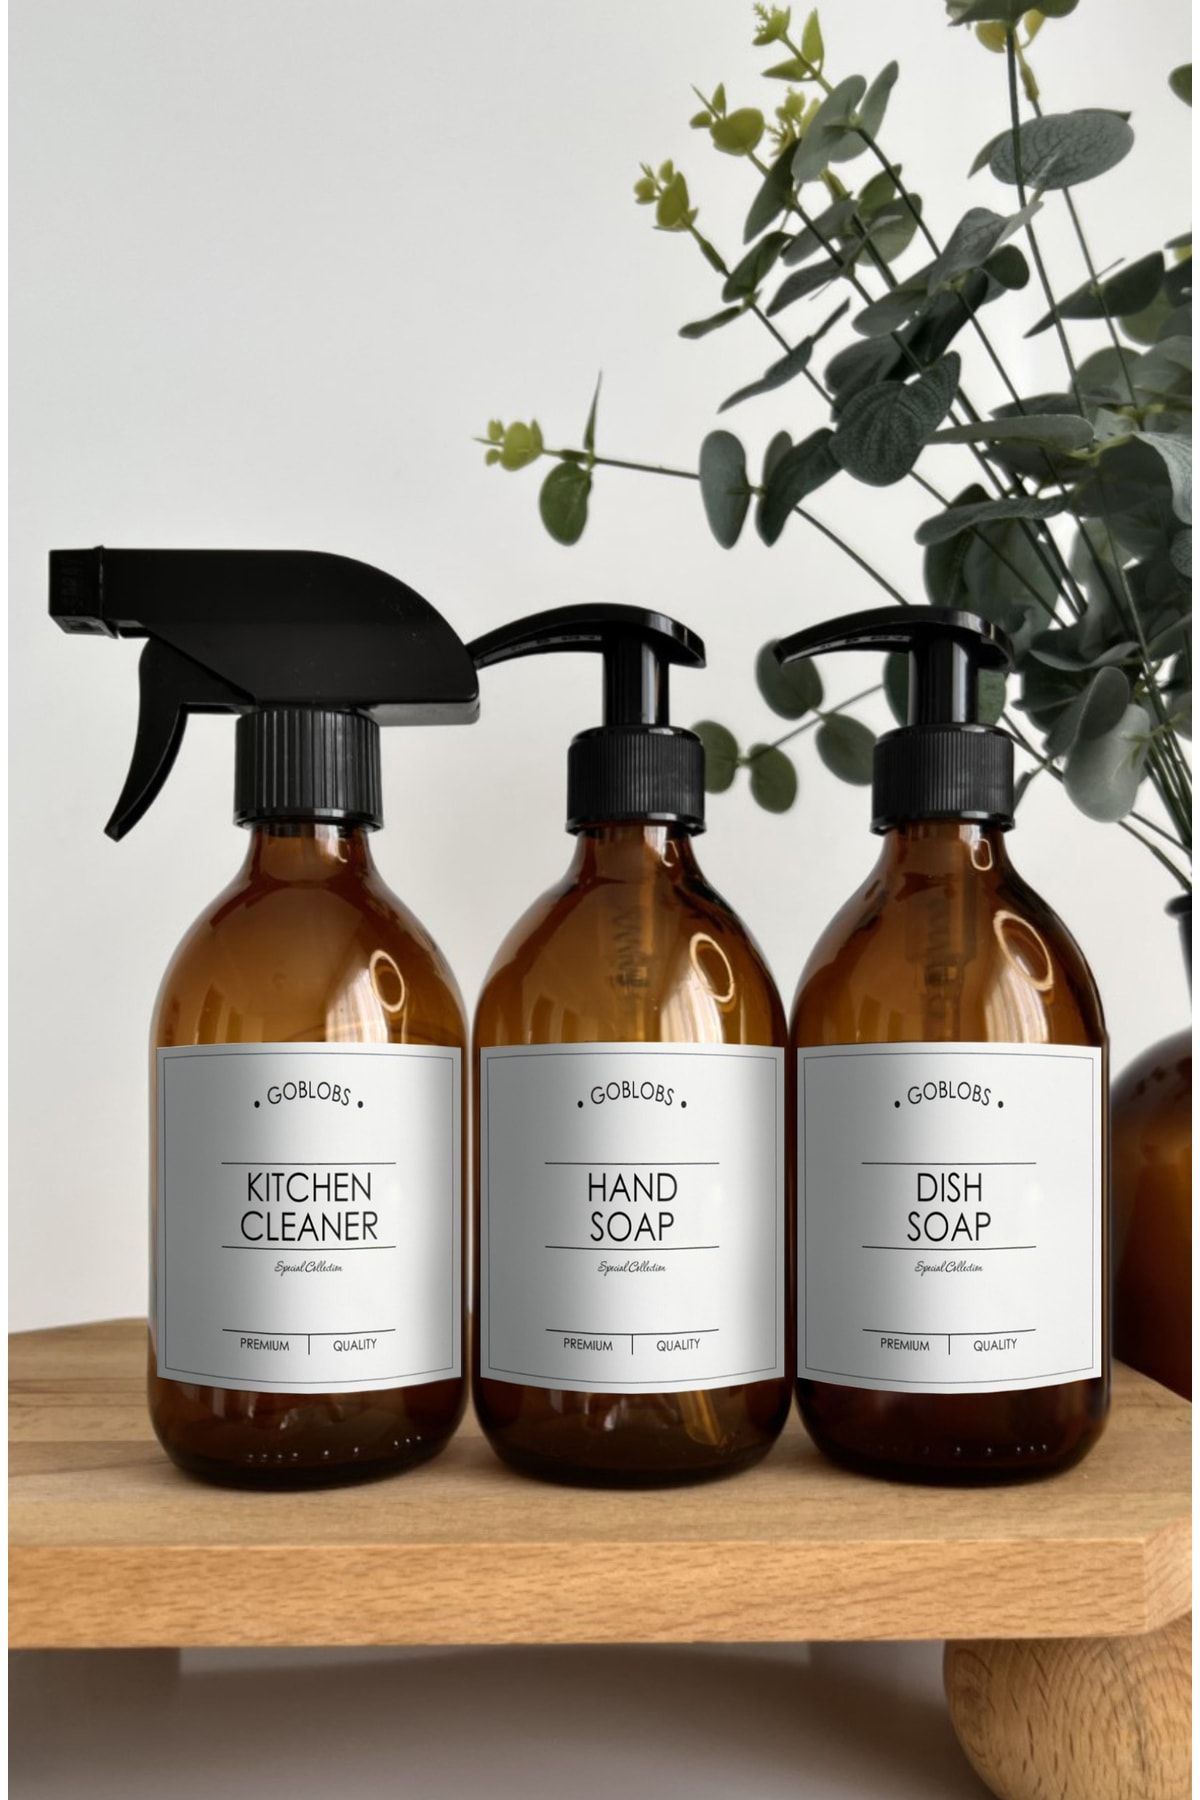 GO BLOBS 3'lü Set 300ml Amber Şişe Sprey Kitchen Cleaner & Hand Soap & Dısh Soap Beyaz